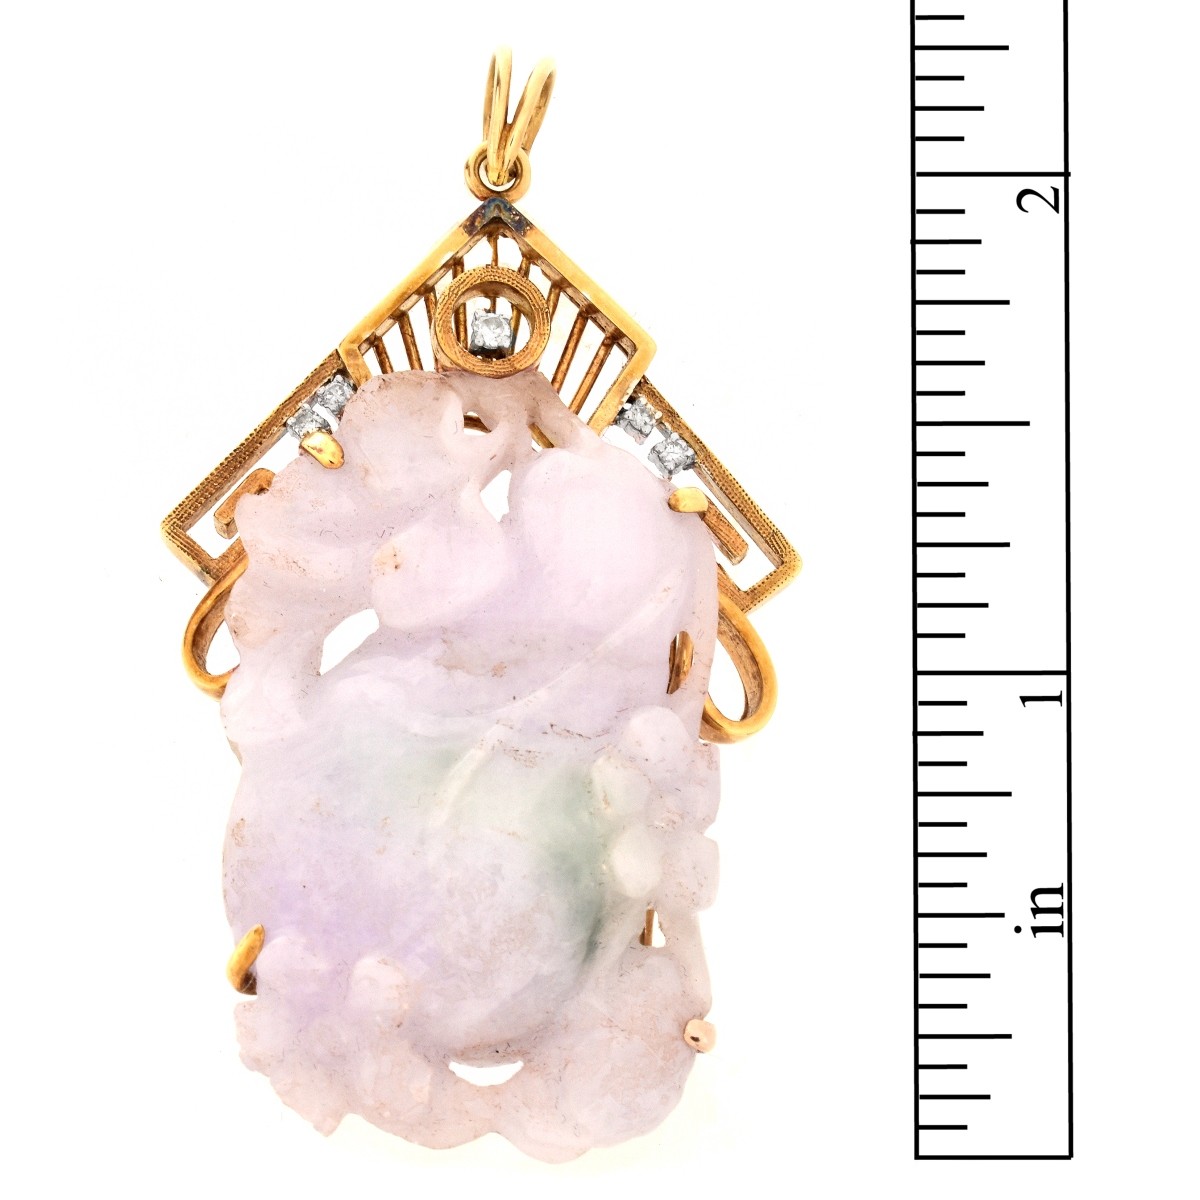 Lavender Jade, Diamond and 14K Pendant